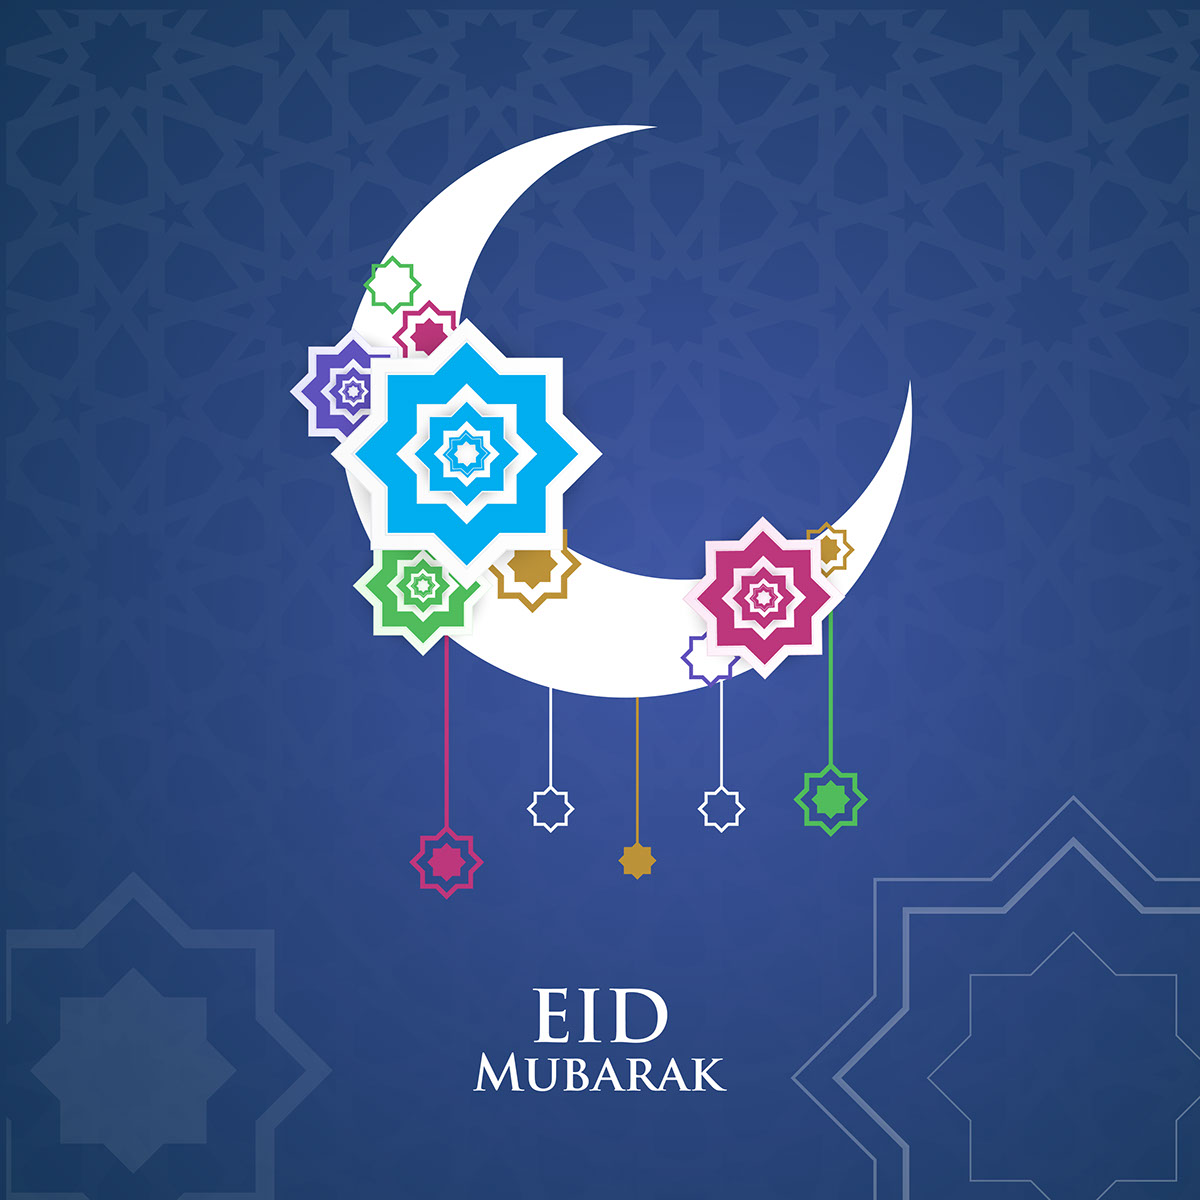 Eid mubarak social media design rendition image